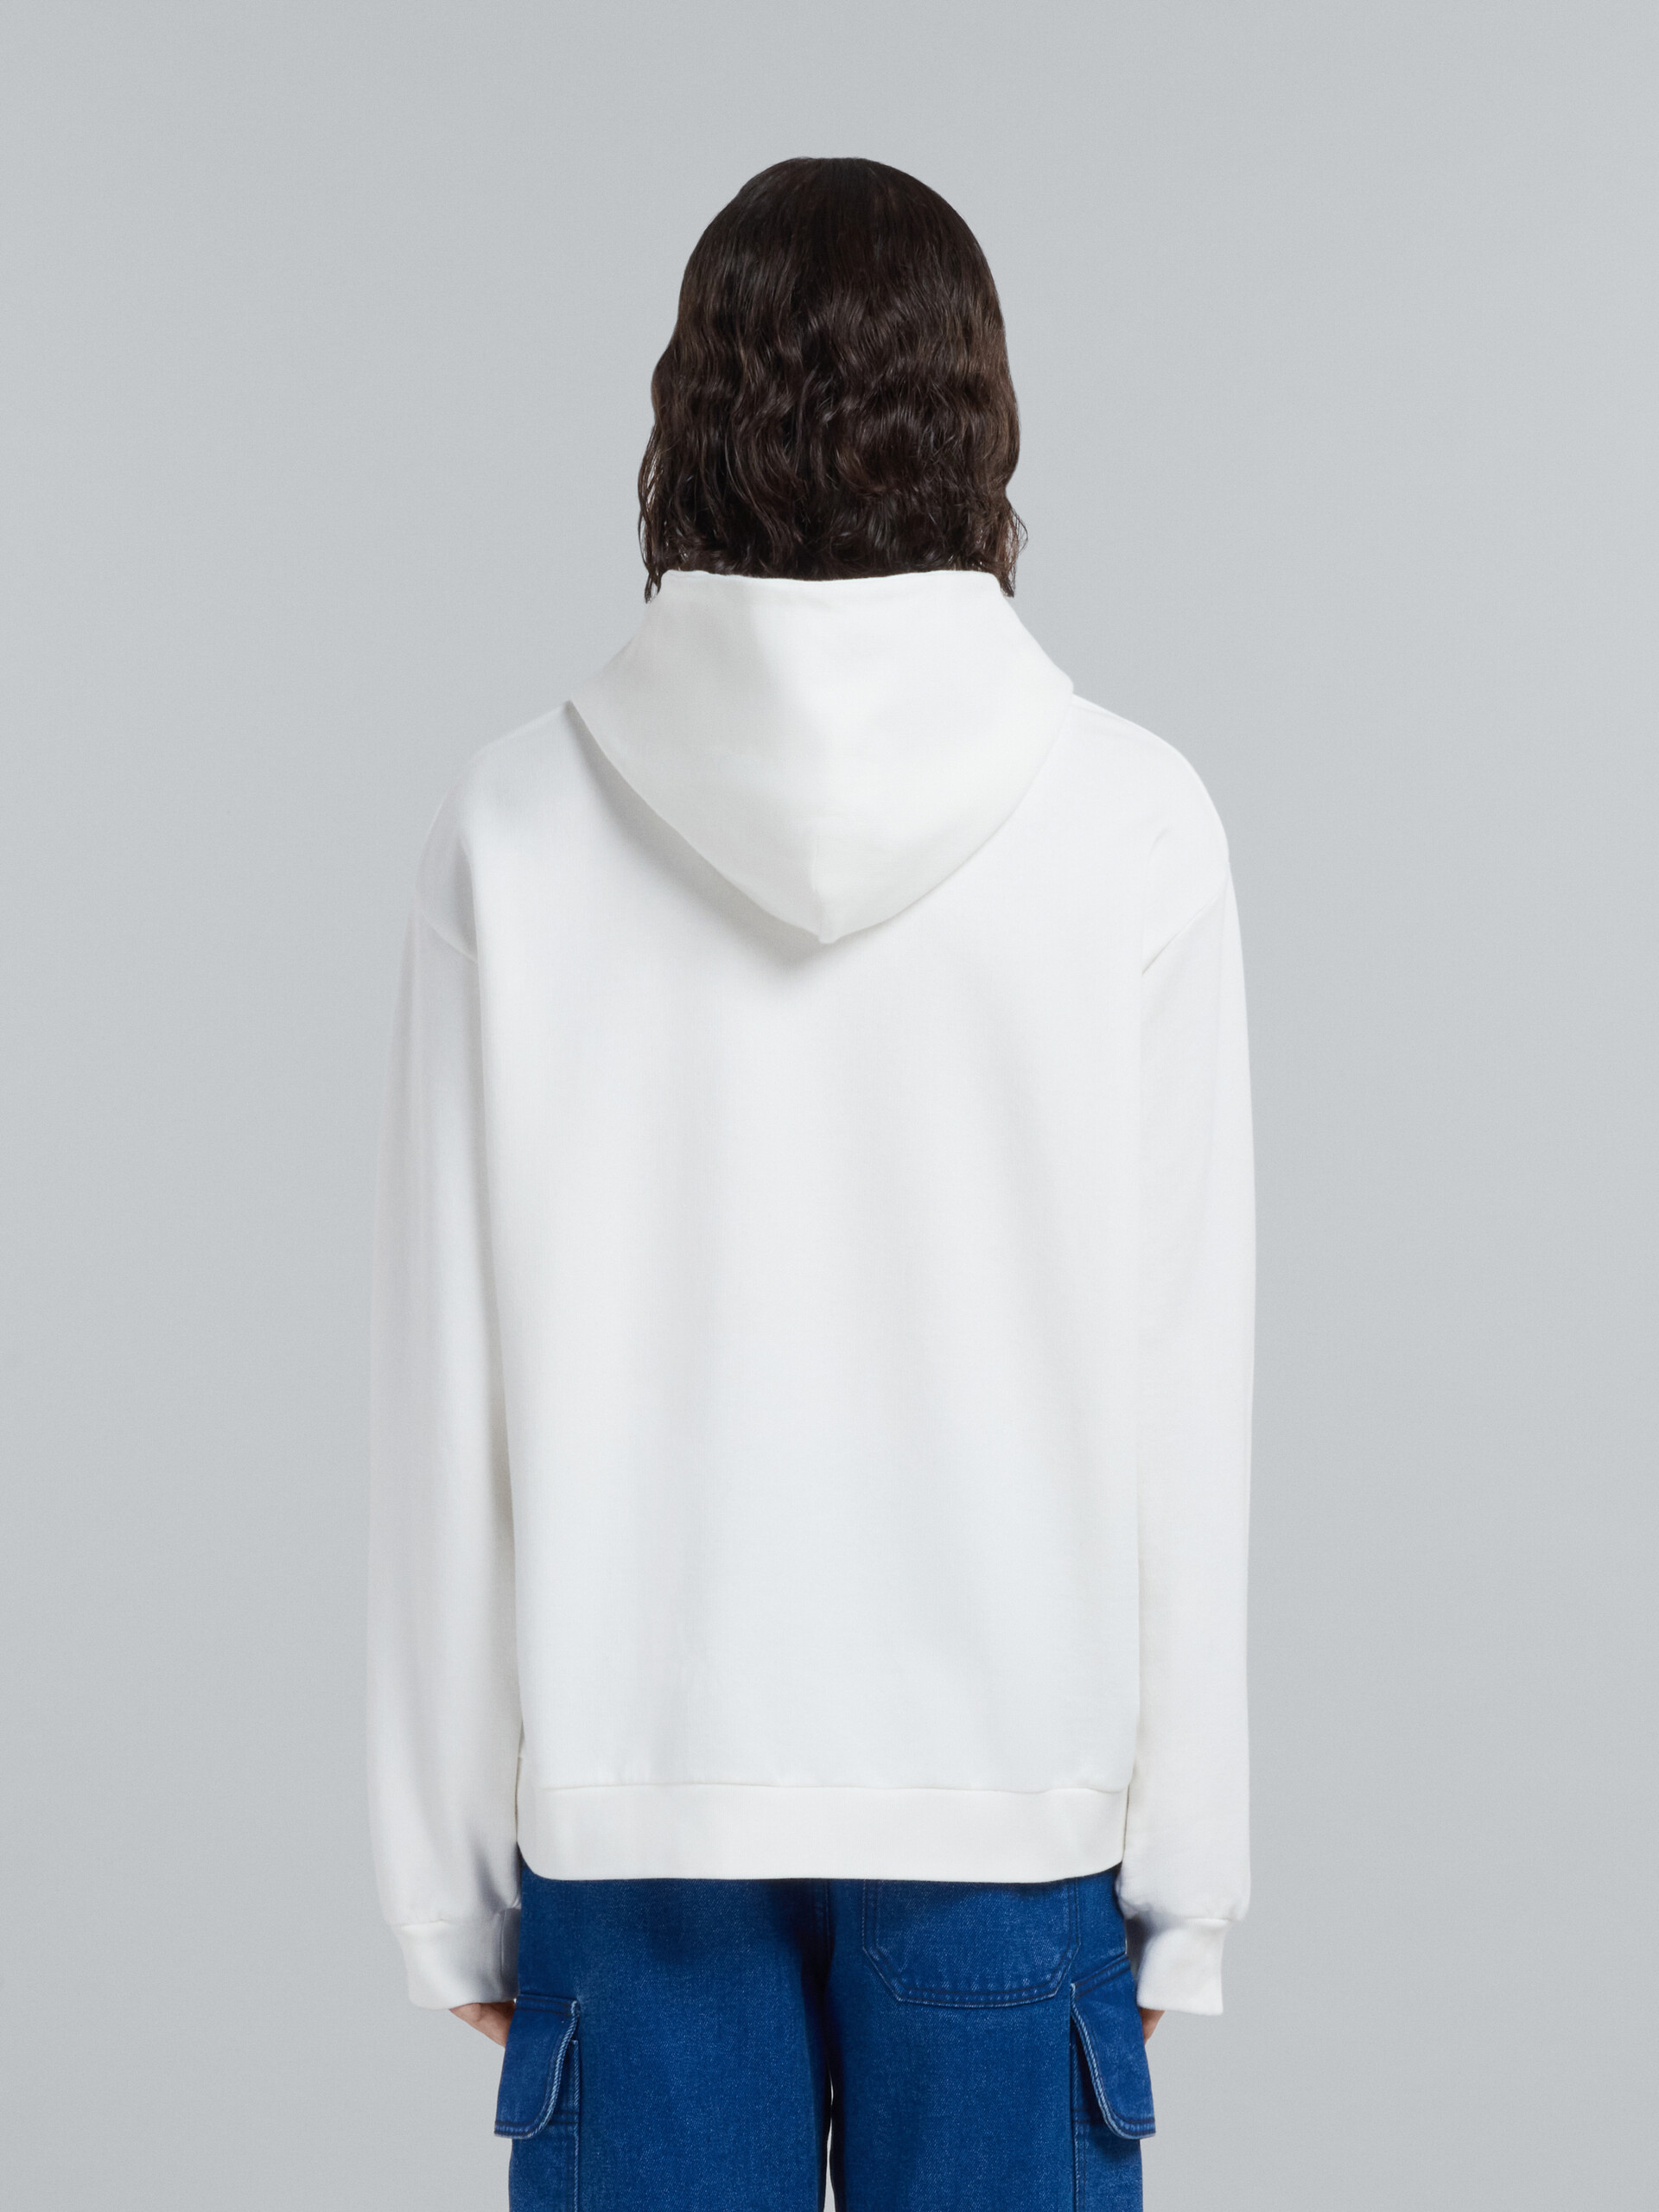 Black cotton sweatshirt with Marni logo - Sweaters - Image 3